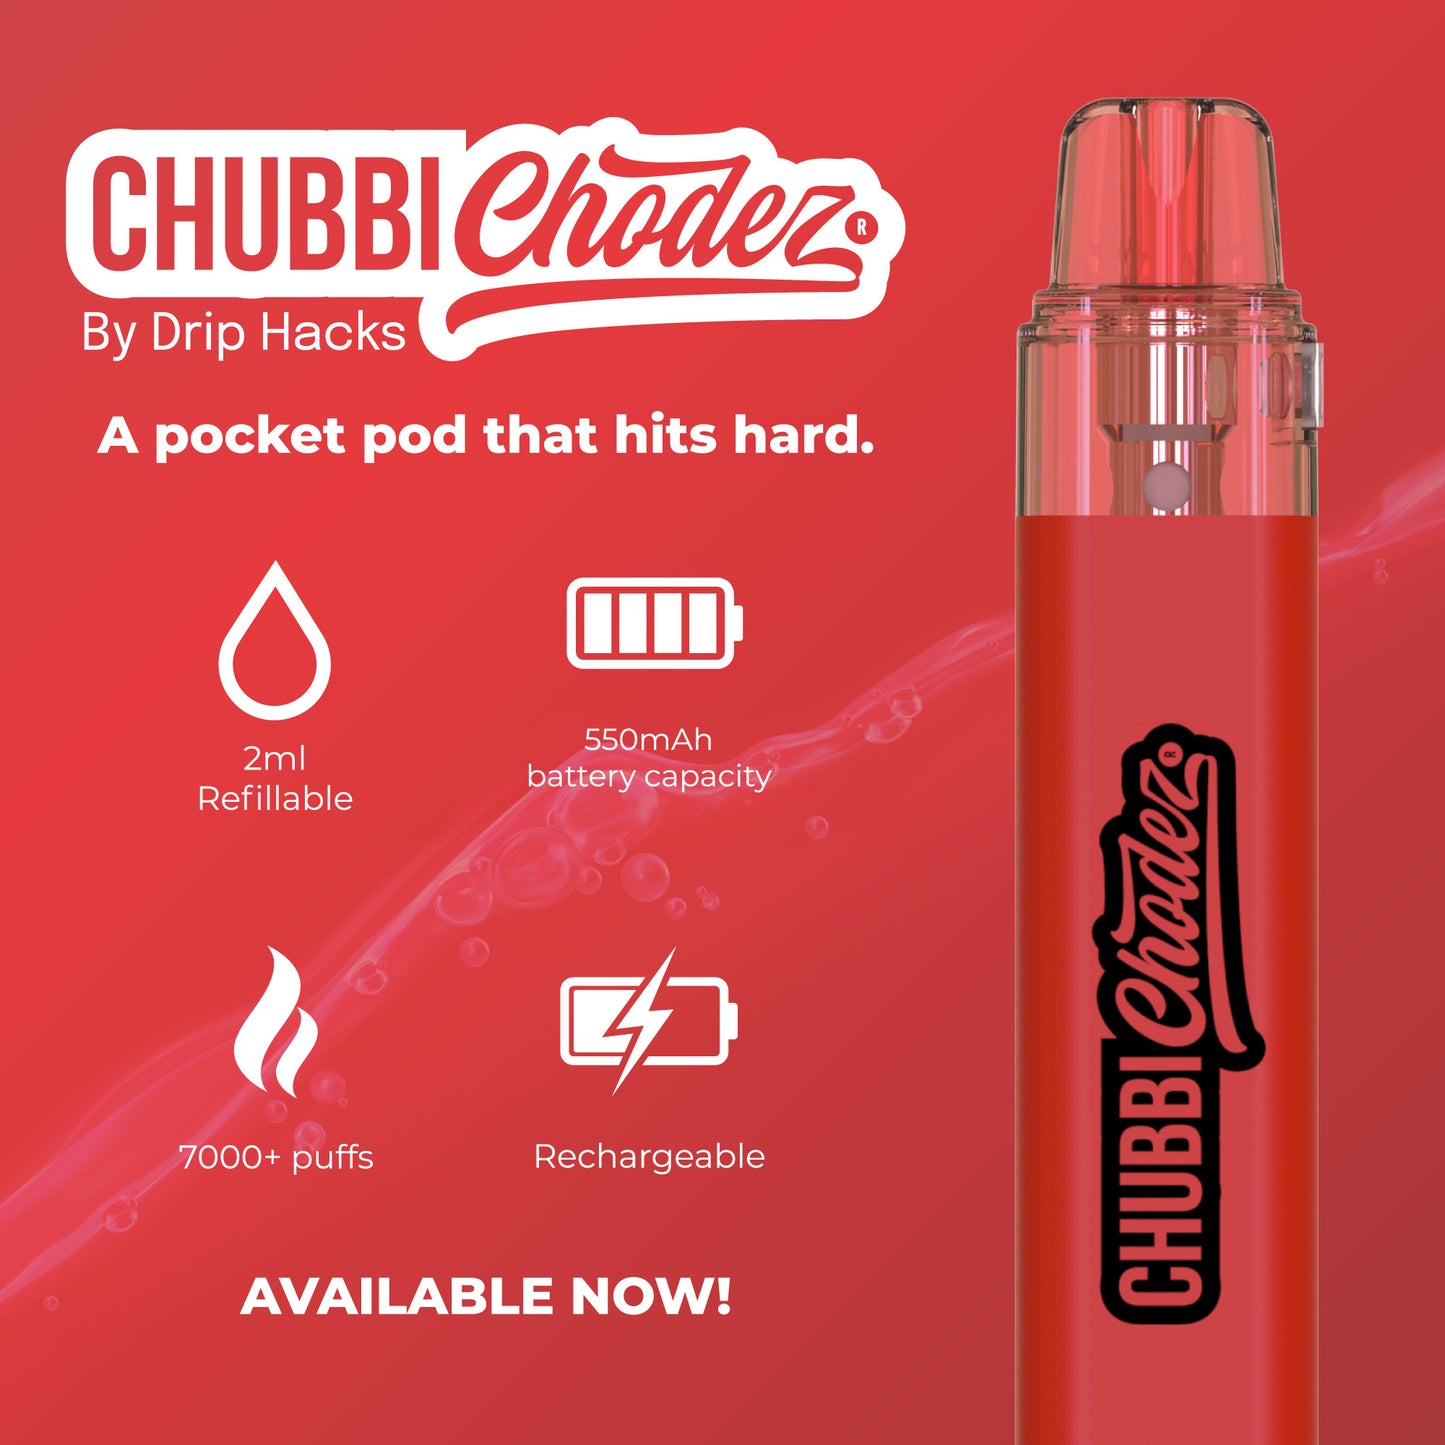 Chubbi Chode - Red